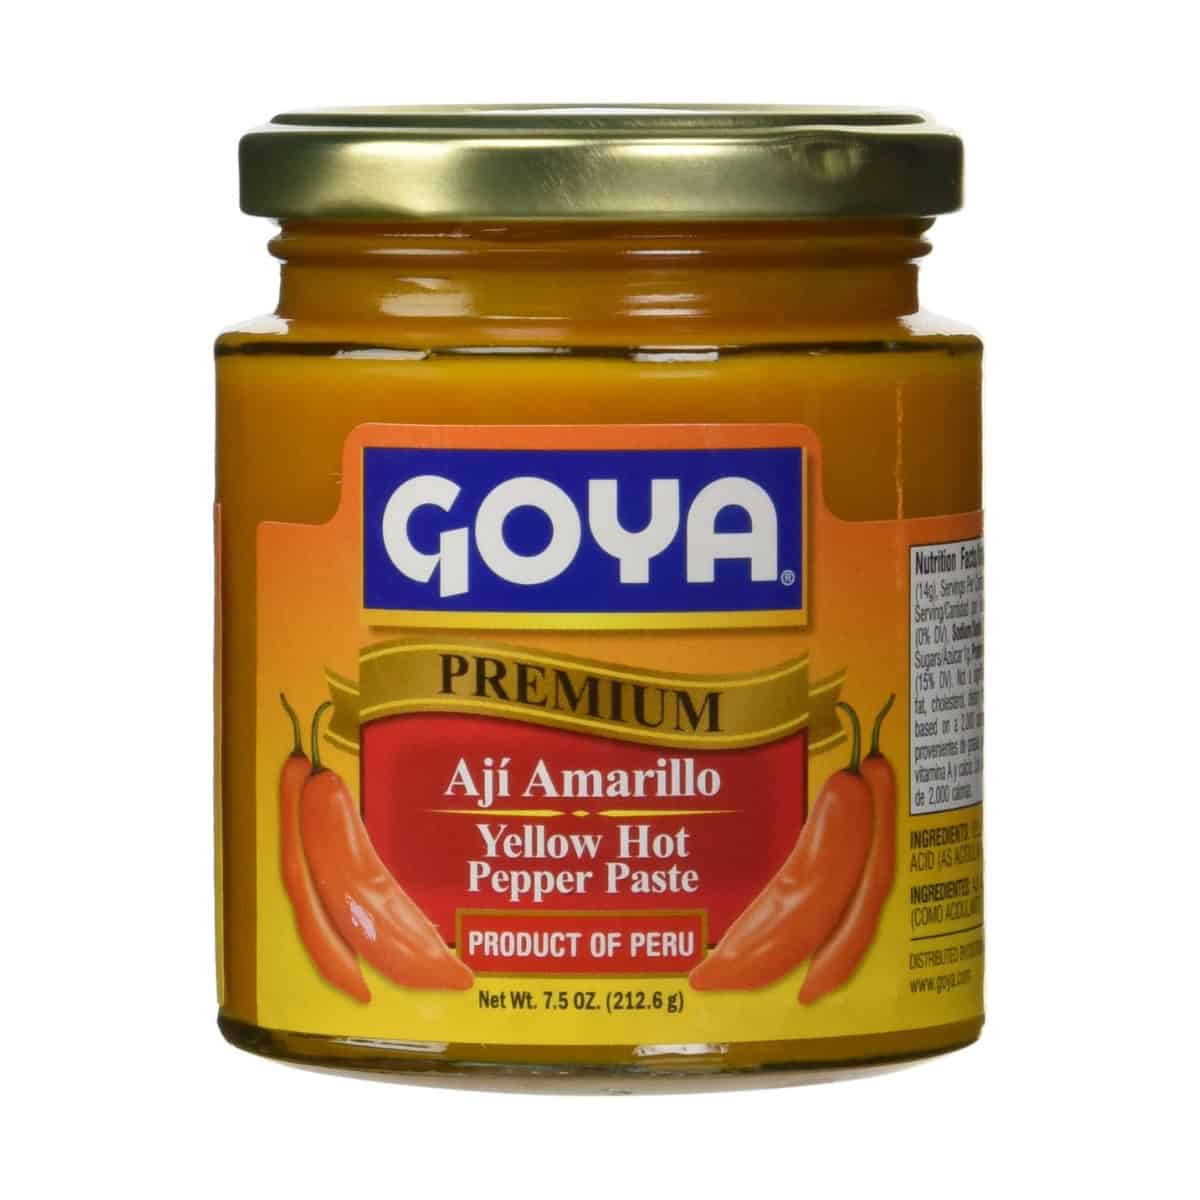 Buy Goya Aji Amarillo (Yellow Hot Pepper Paste) - 212.6 gm